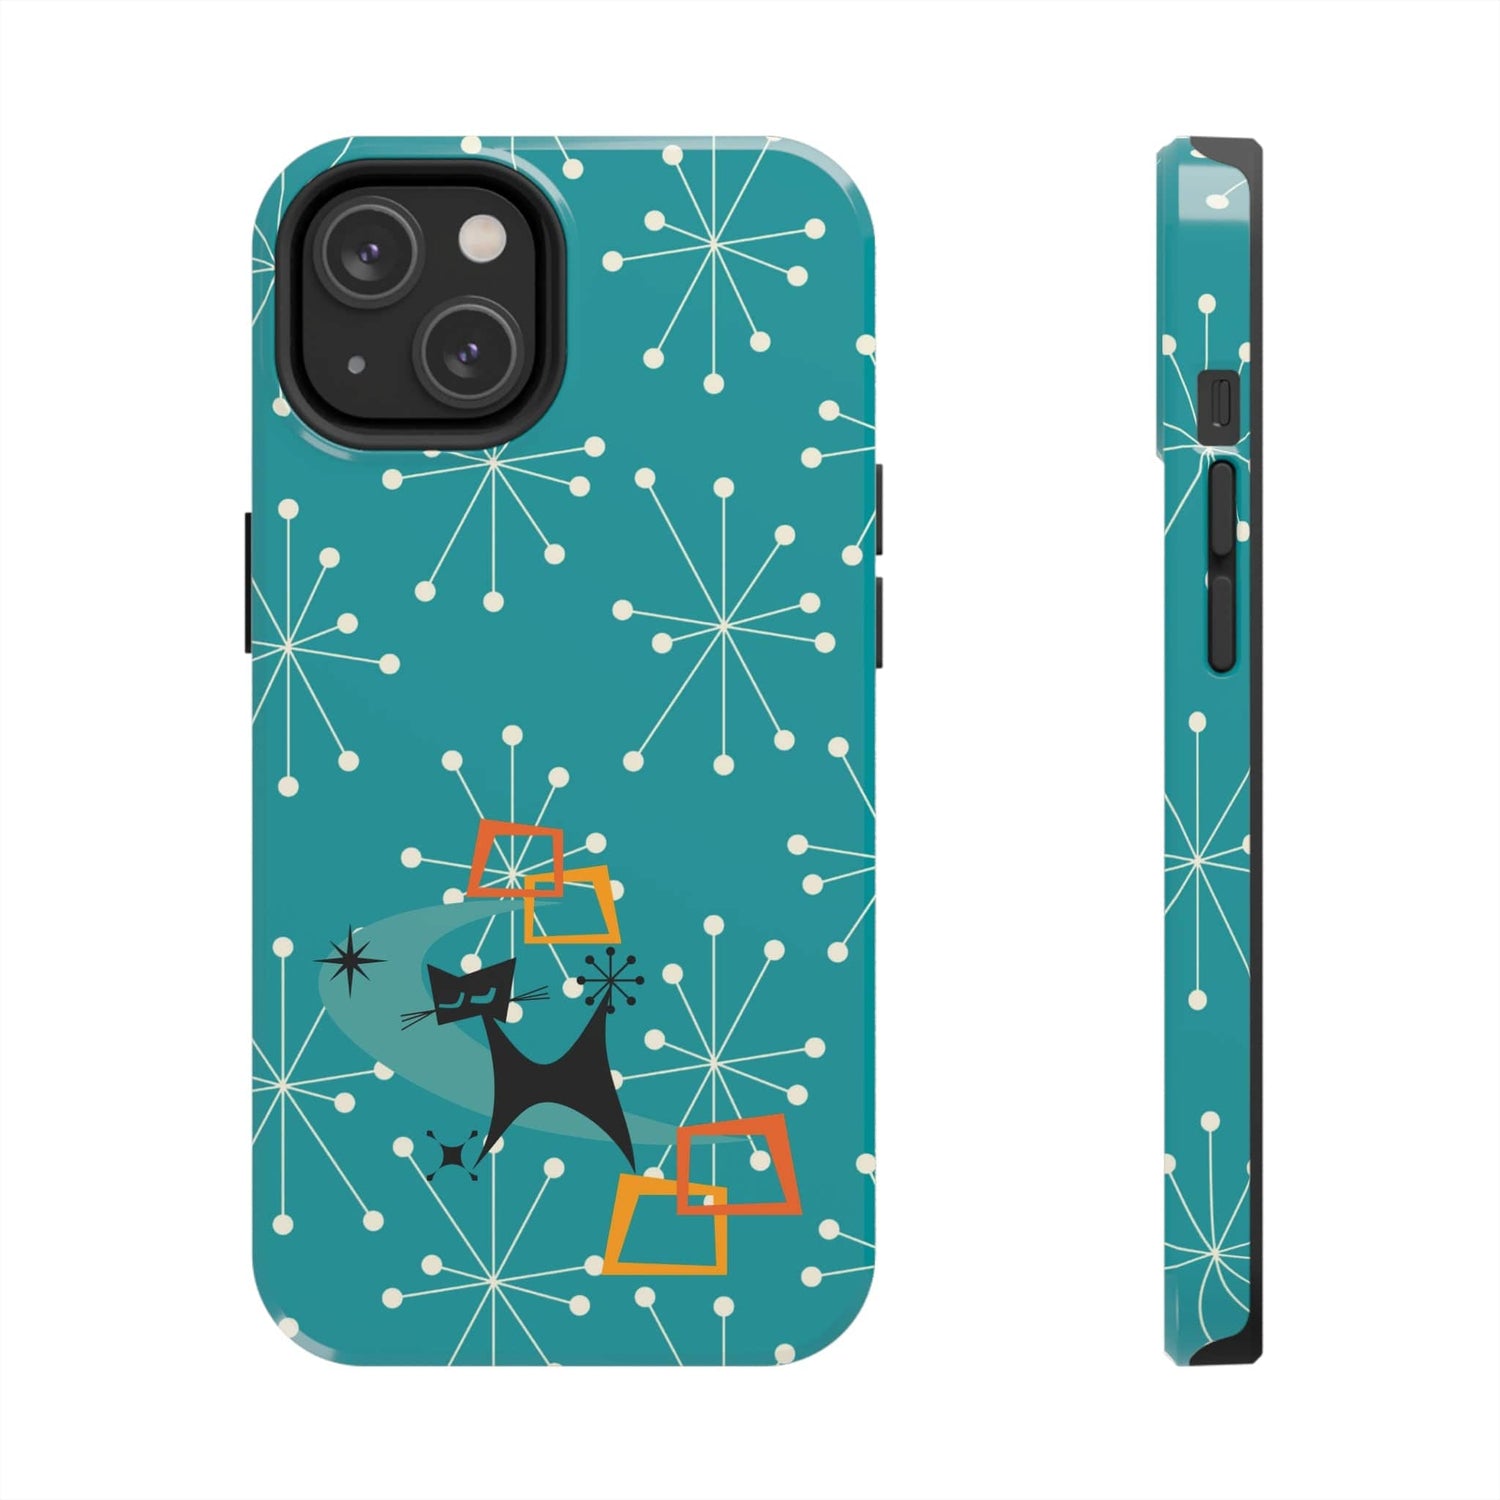 Atomic Space Cat, Starburst Blue, Retro Groovy Smart Phone Tough Phone Cases Phone Case